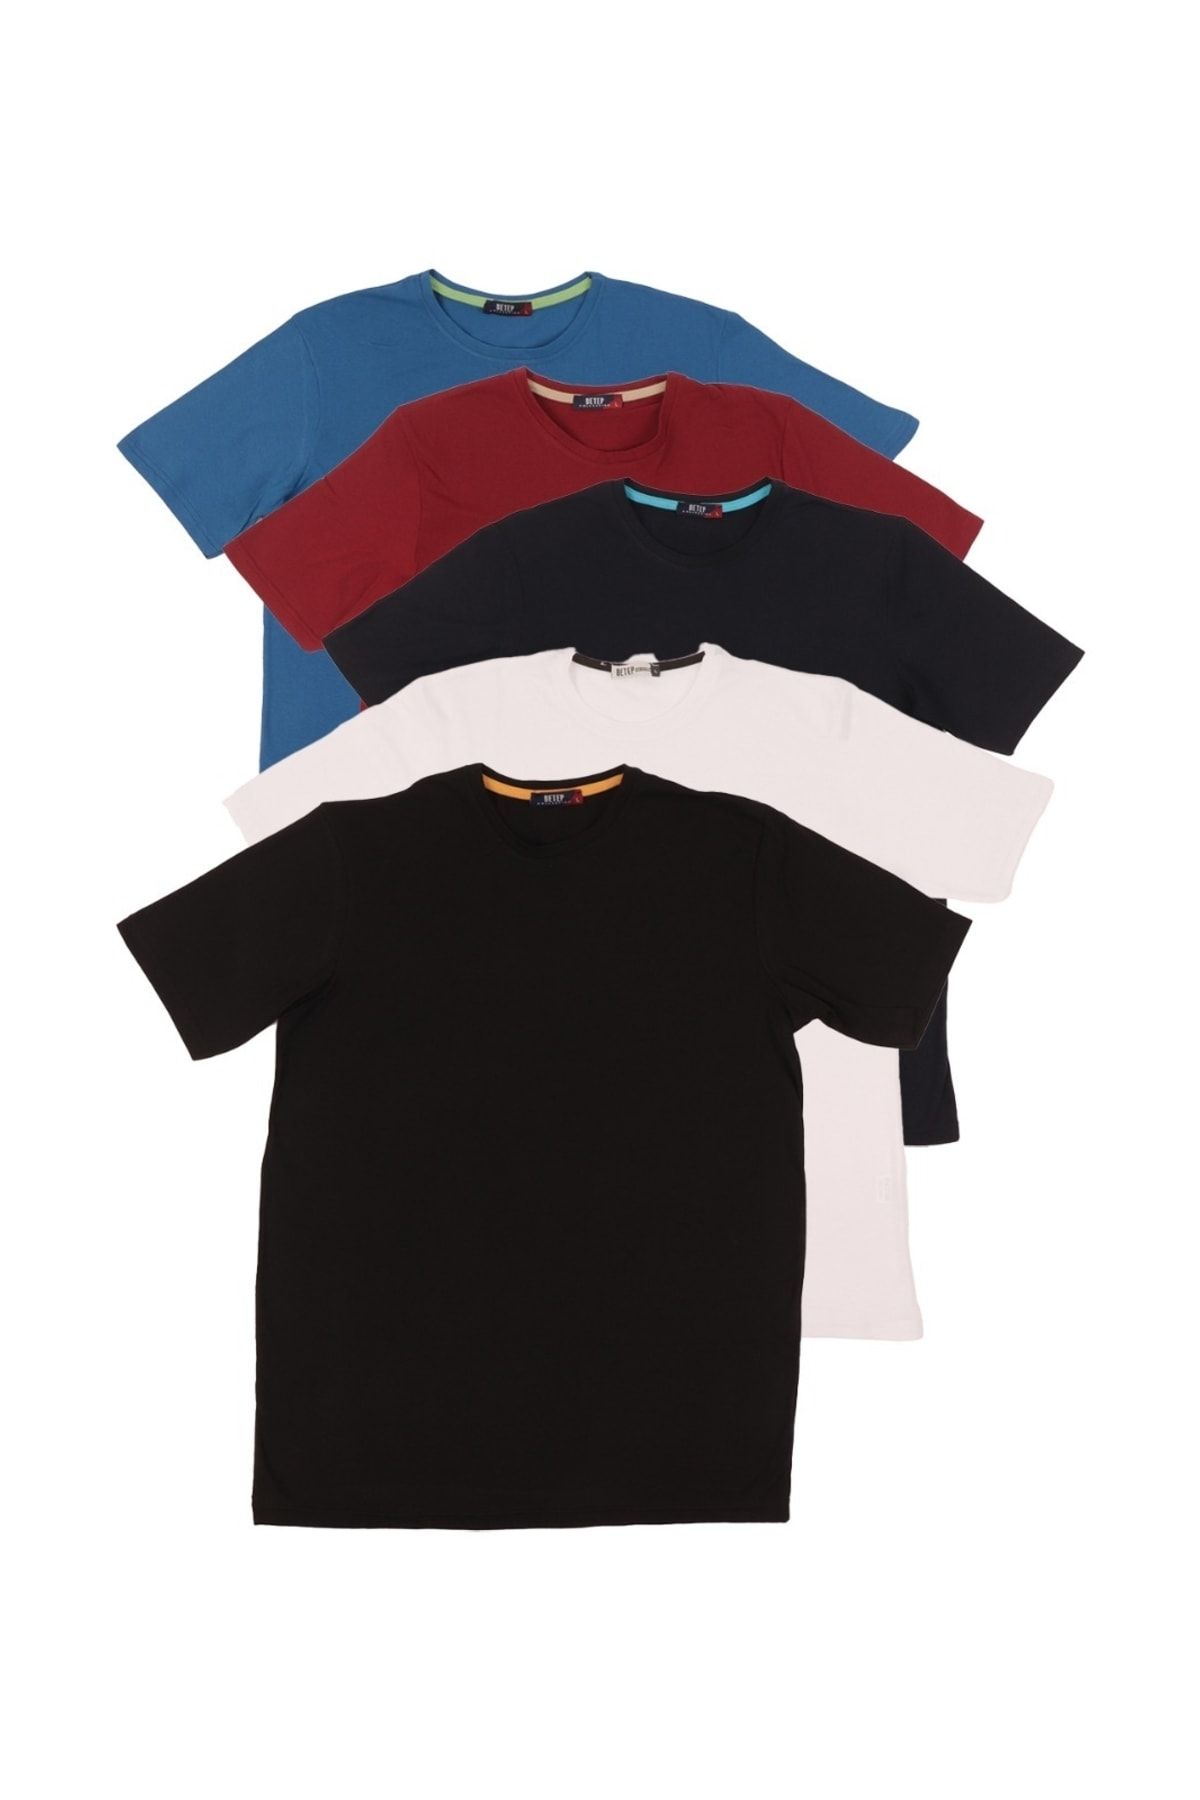 Genel Markalar Erkek 5'li Tişört Paketi Saks Bordo Lacivert Siyah Beyaz Comfort Bisiklet Yaka Kısa Kol T-shirt